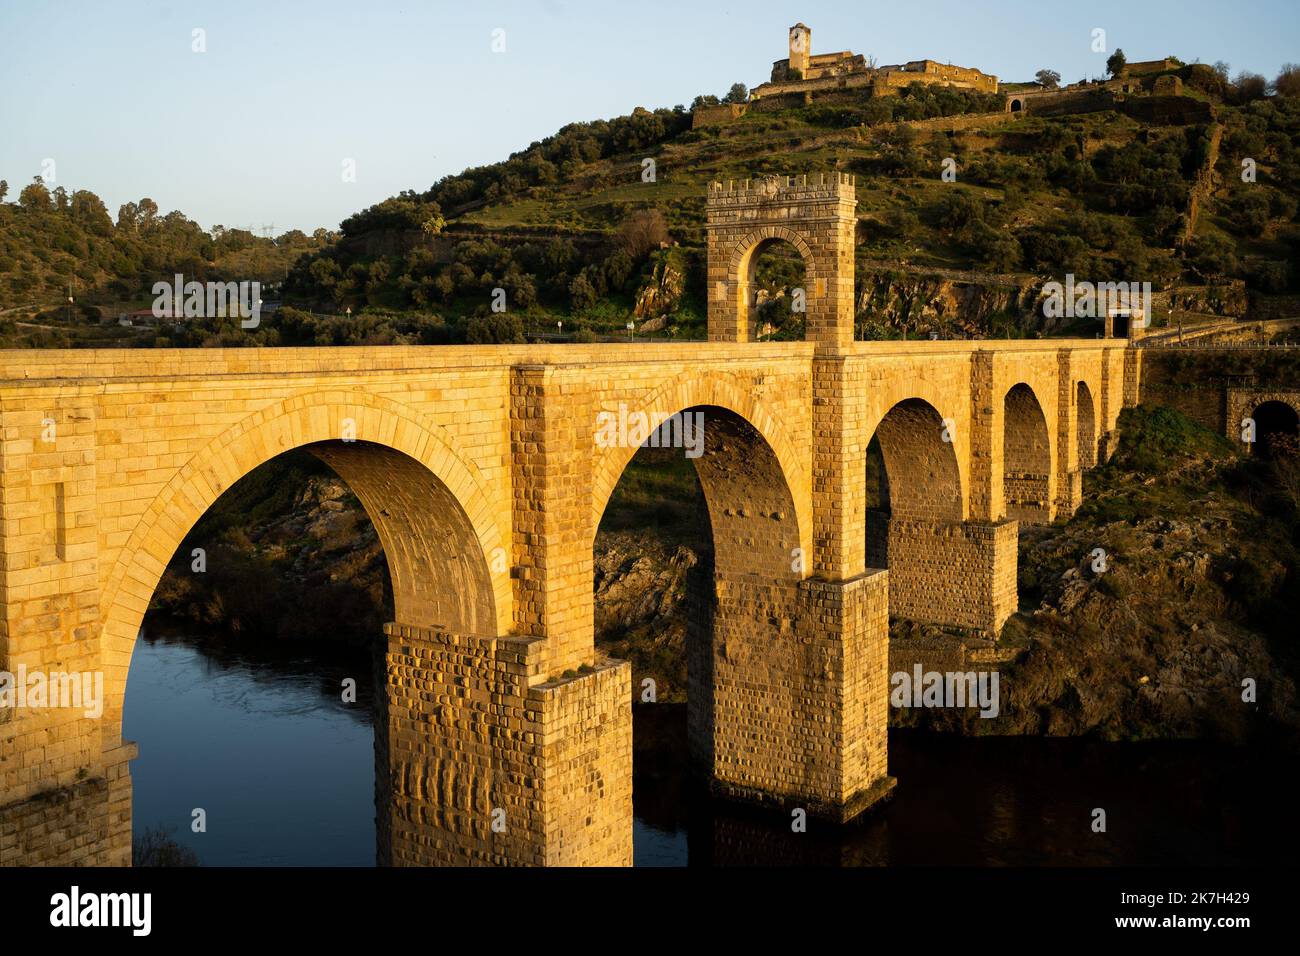 SIMON DAVAL / MAXPPP - Illustration, Region d'Estremadure, Espagne, fevrier 2022 - Village d'Alcantara et son pont Romain en camping-car - SPANIEN 2022 Stockfoto